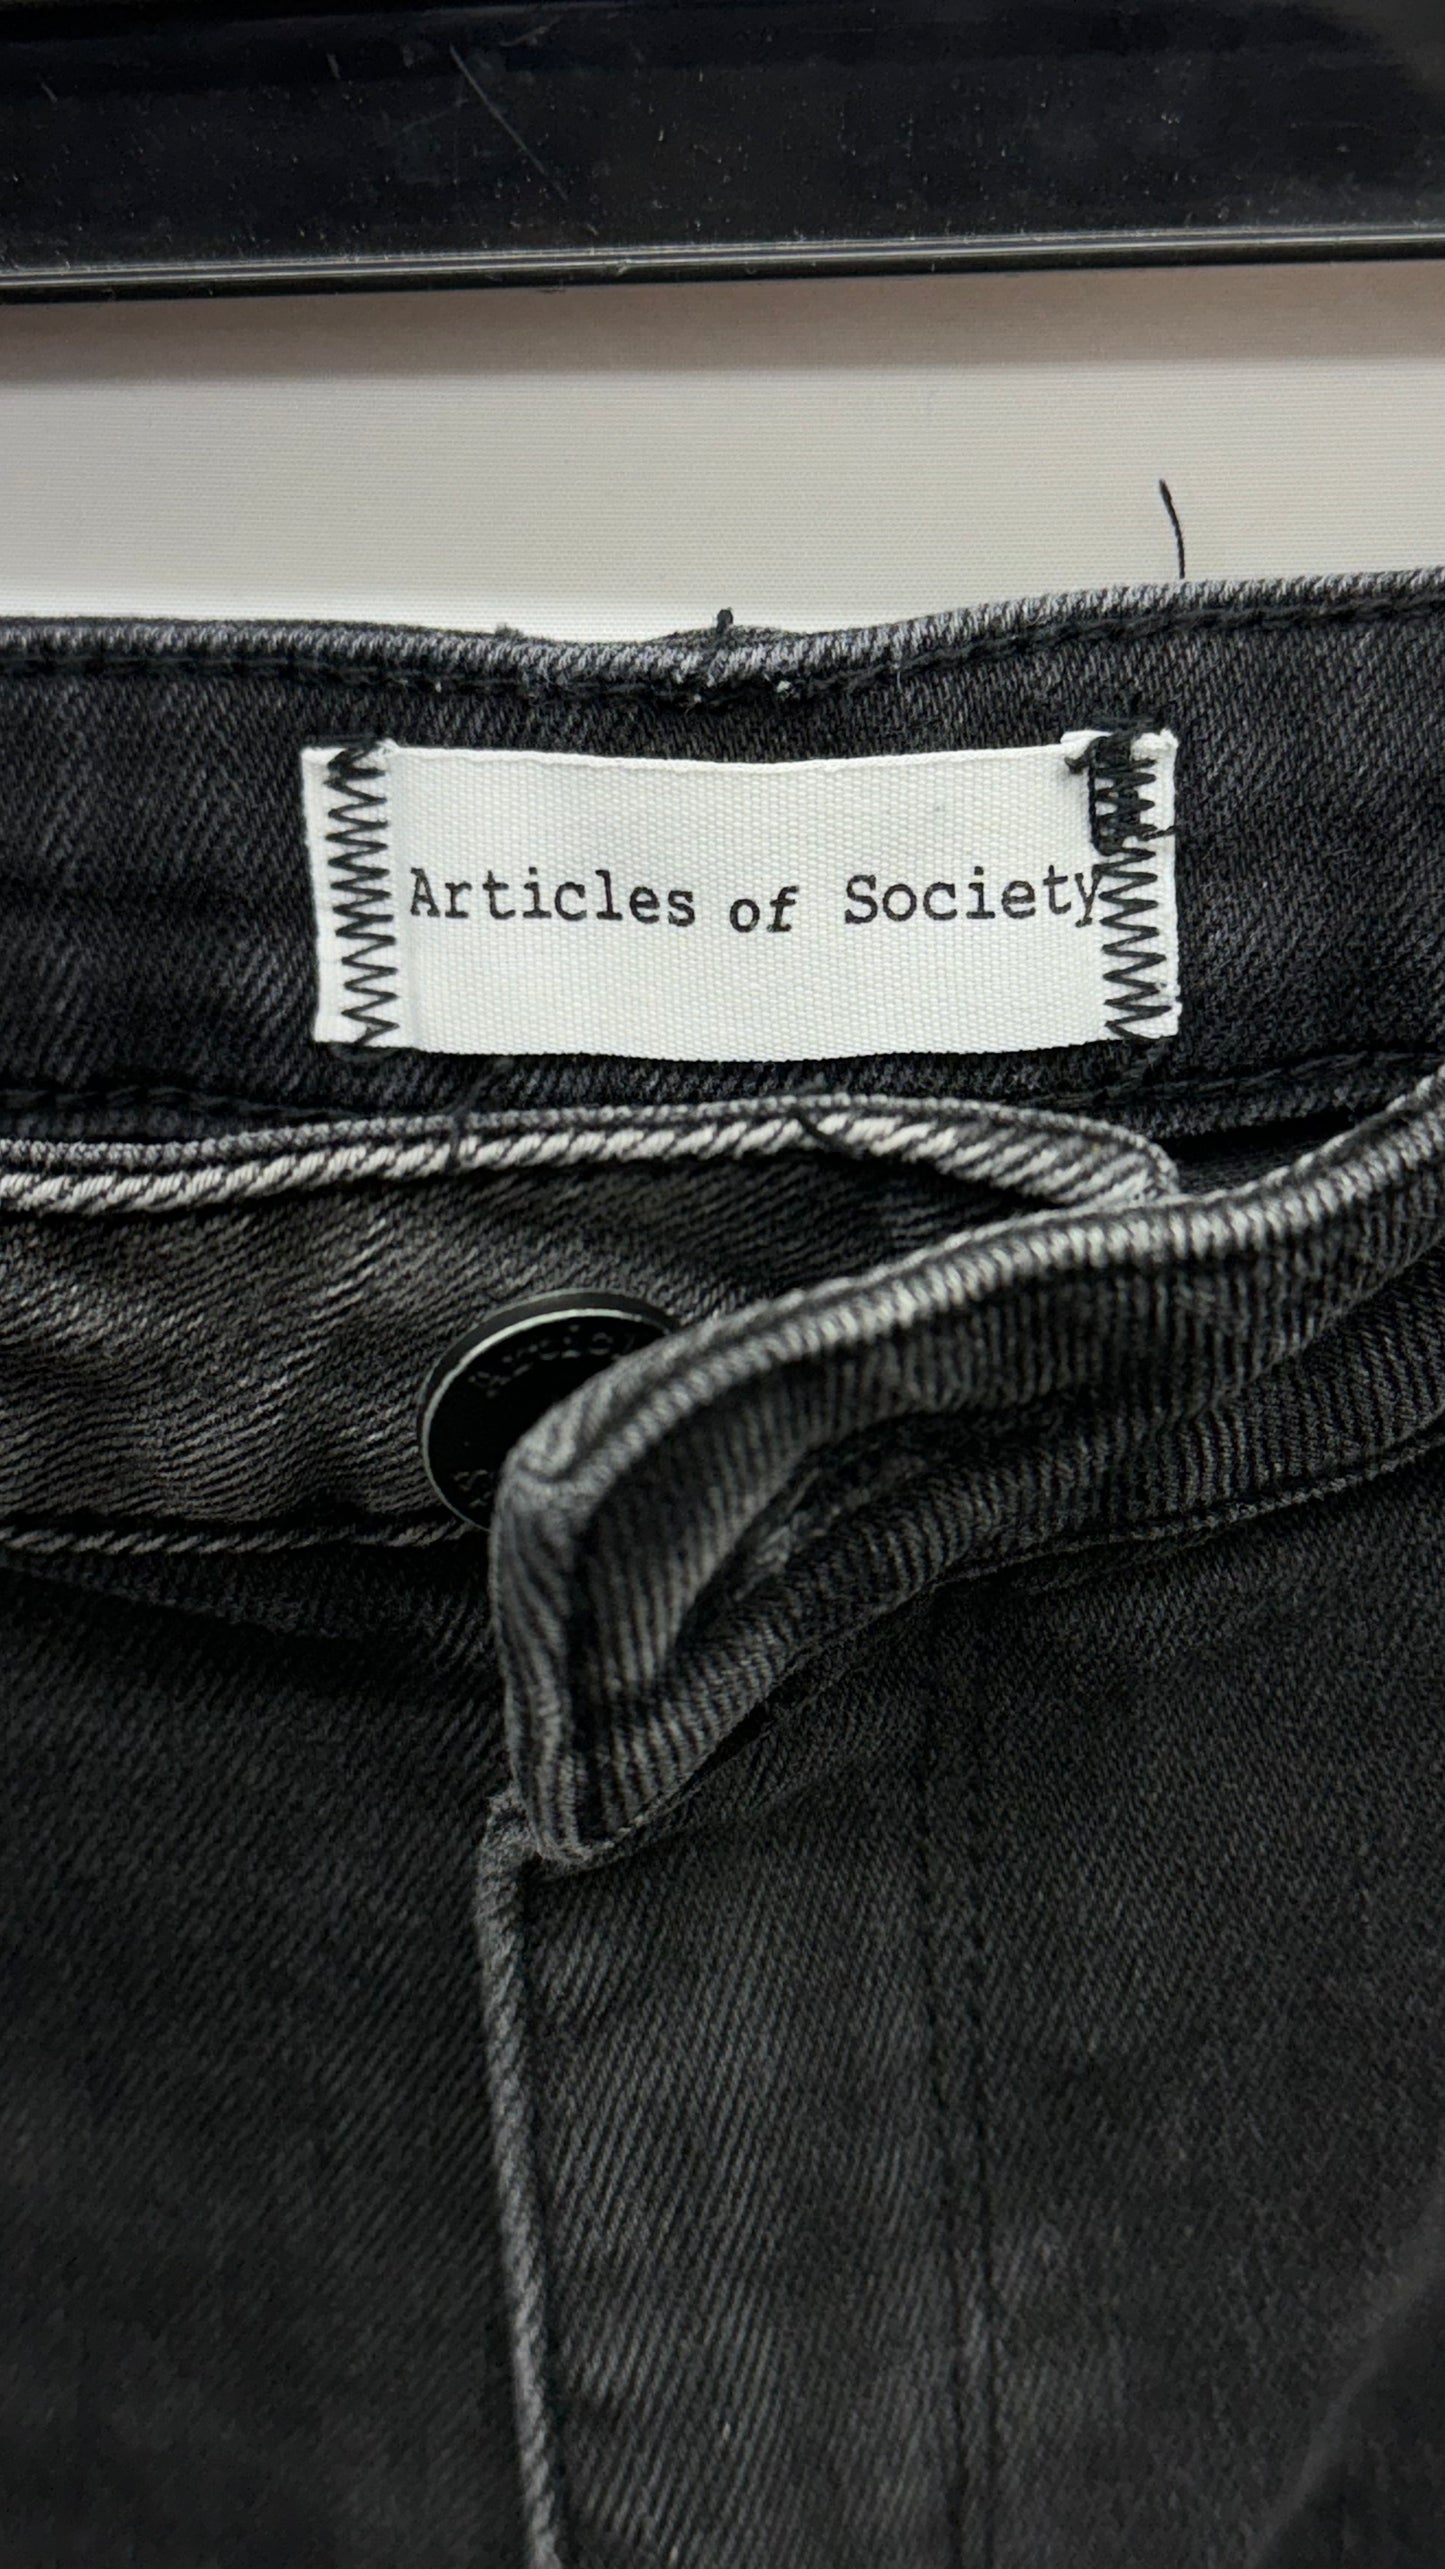 Articles of Society Women’s Denim Shorts Black - Size Medium